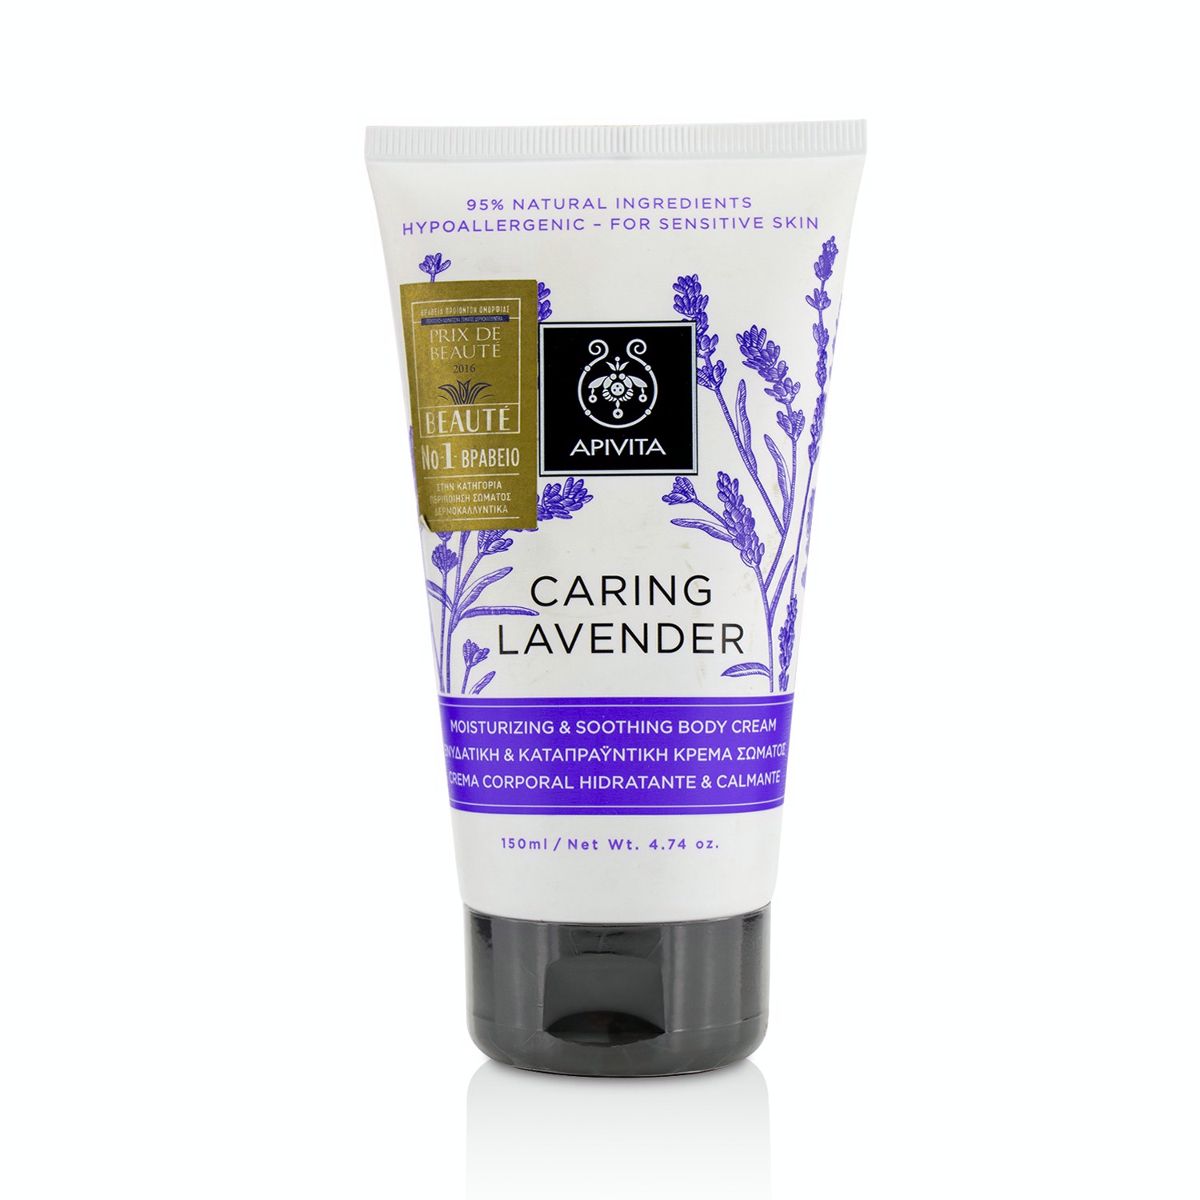 Caring Lavender Moisturizing  Soothing Body Cream Apivita Image